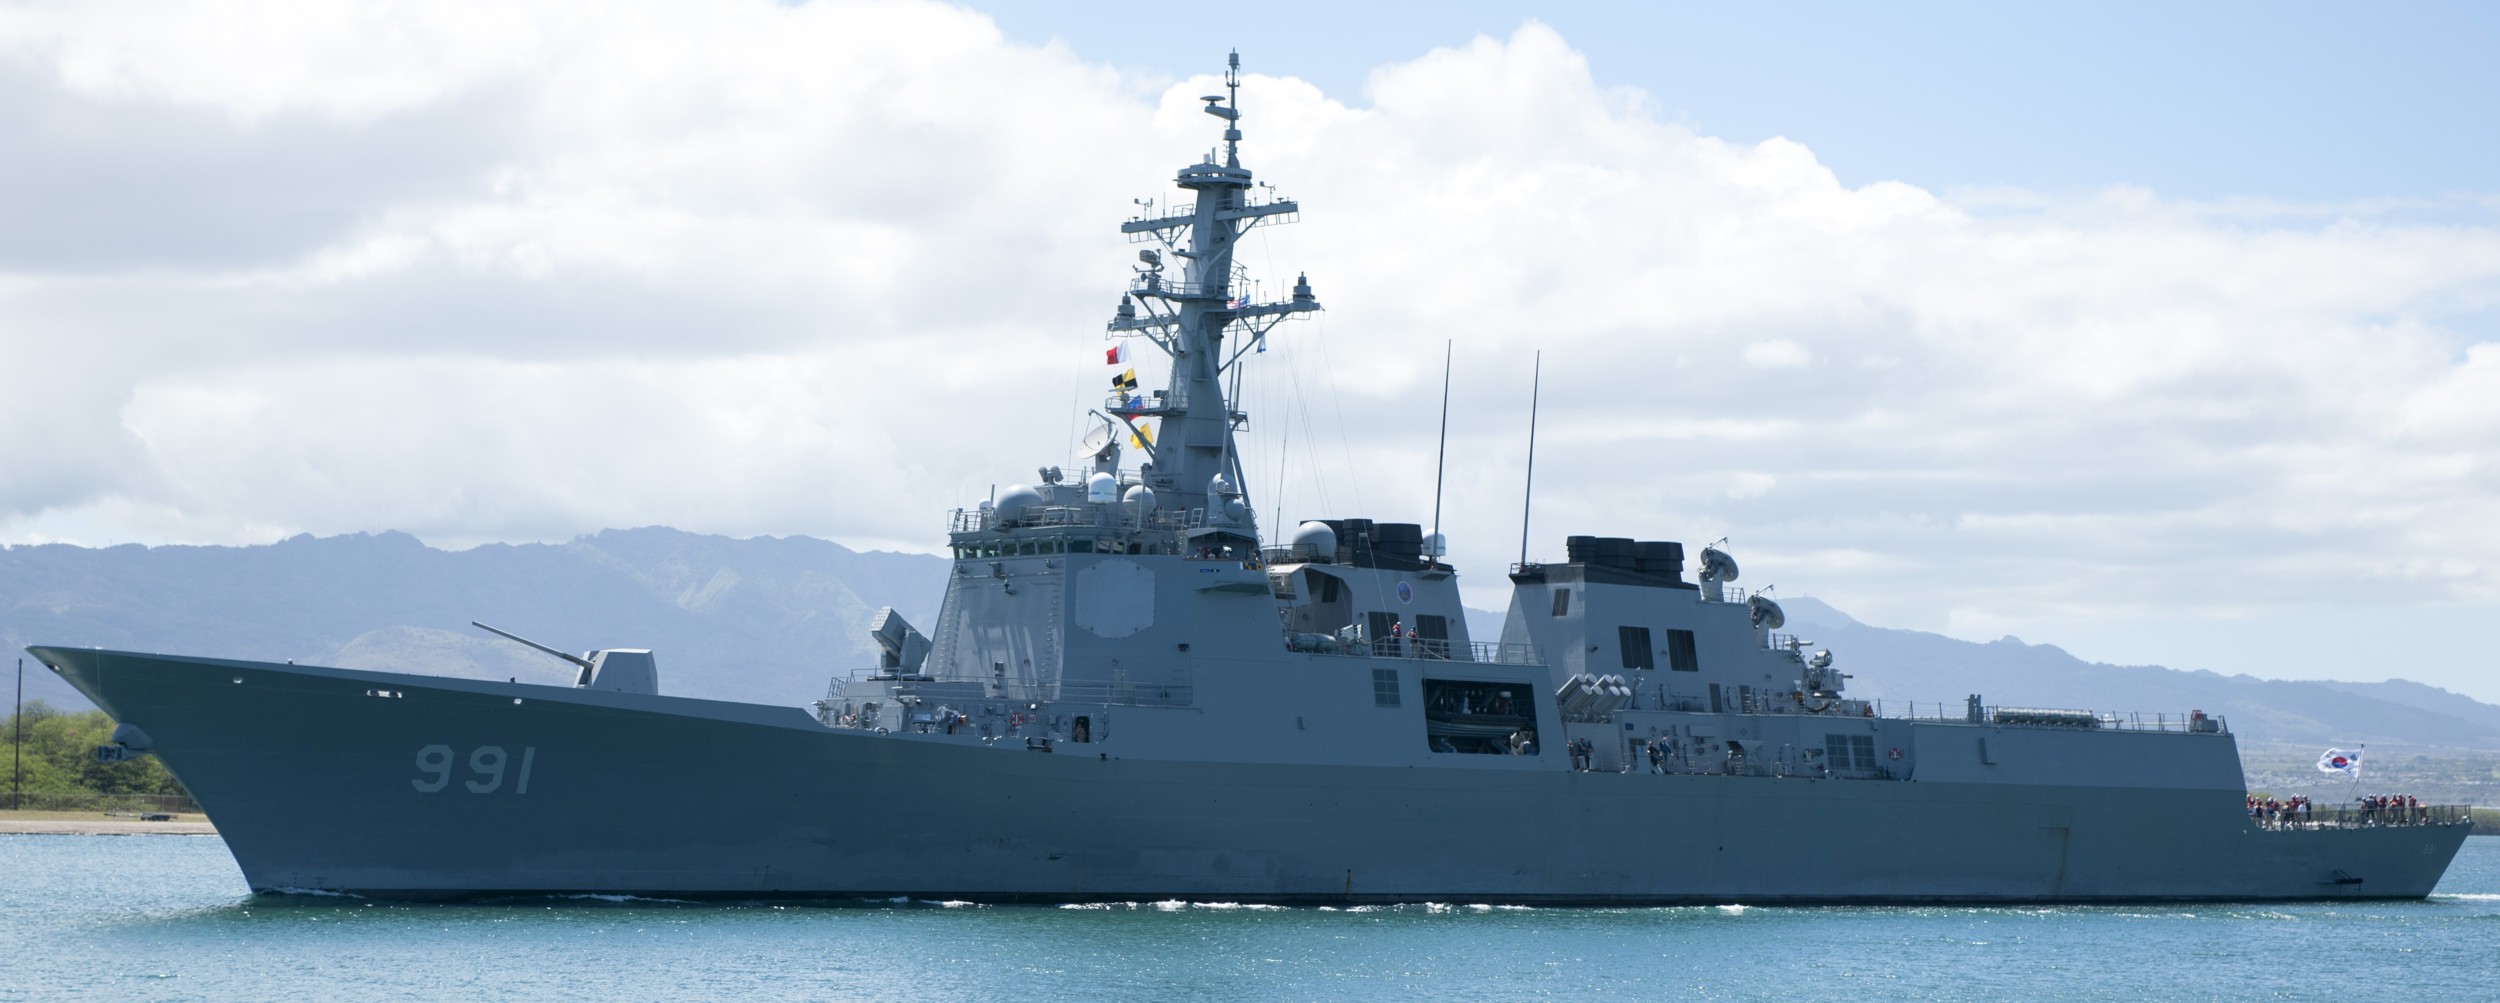 ddg-991 roks sejong the great guided missile destroyer aegis republic of korea navy rok 16